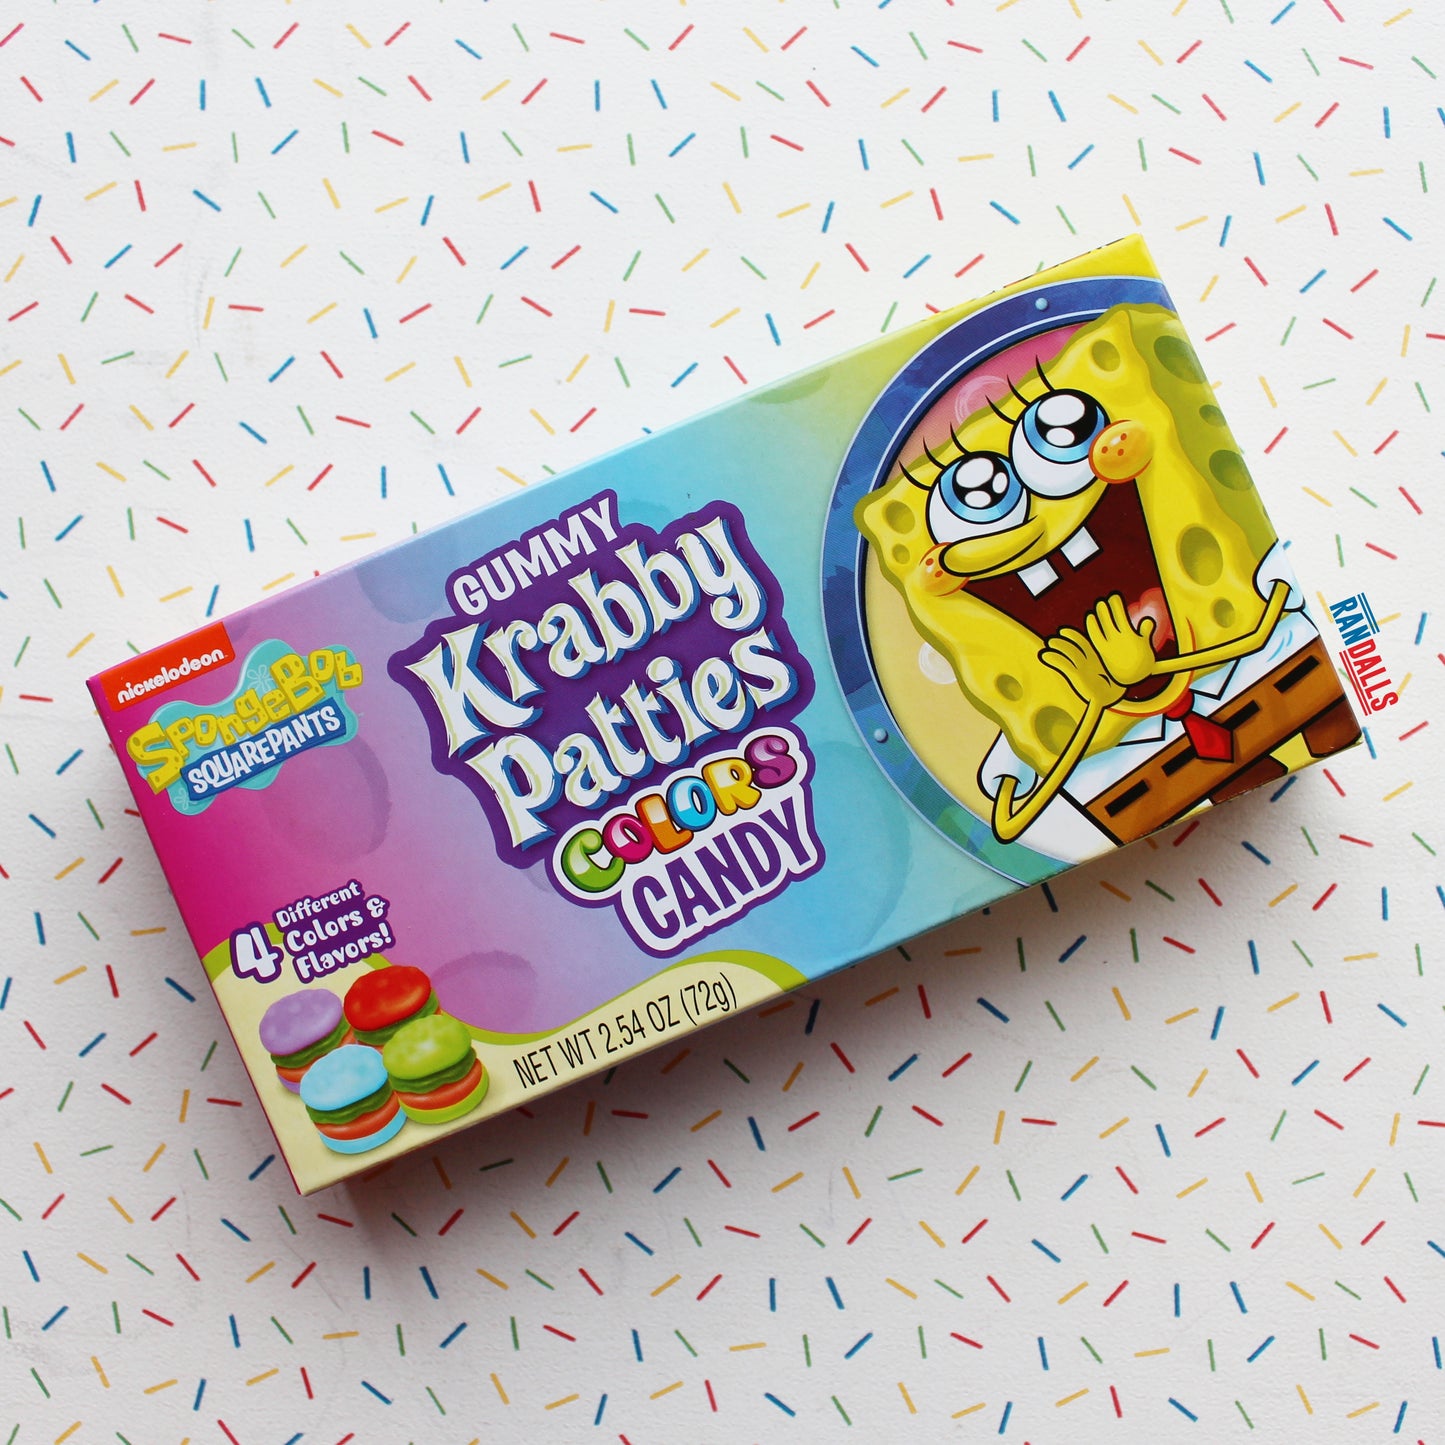 krabby patty colours, candy, sweets, gummy, chewy, spongebob squarepants, nickolodeon, randalls